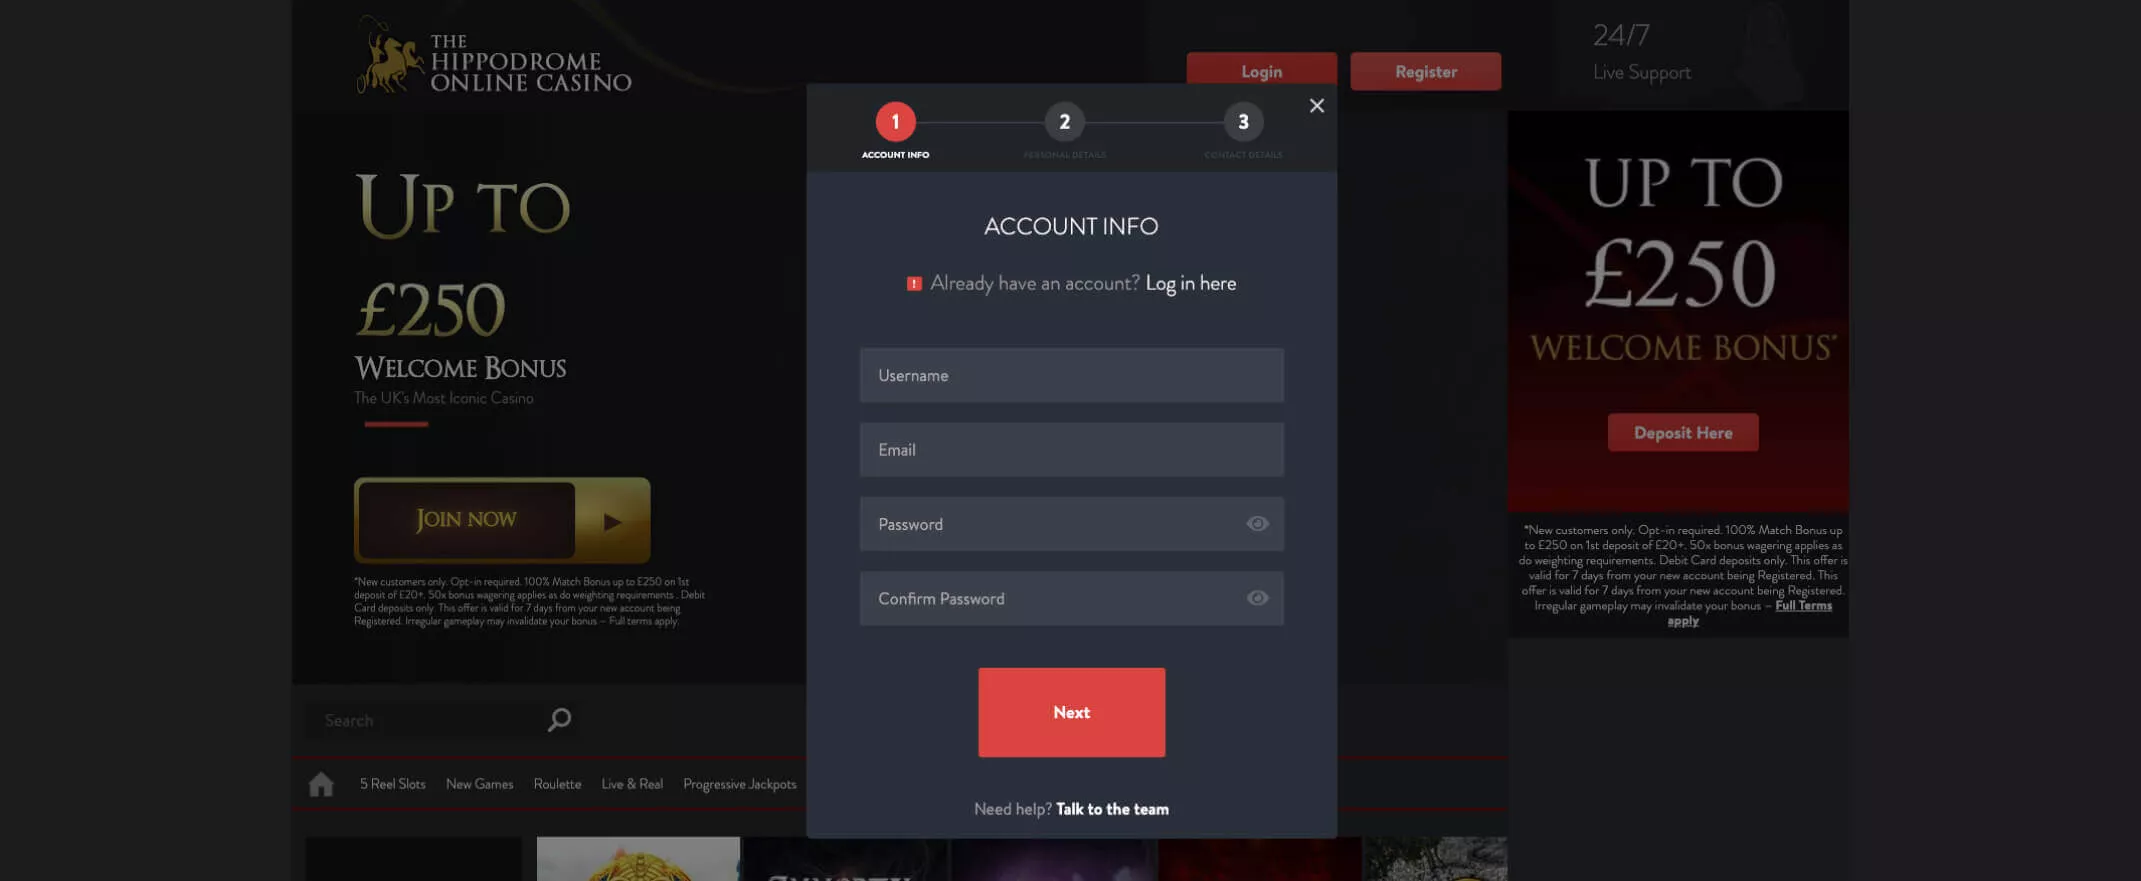 Hippodrome online casino screenshot of the registration